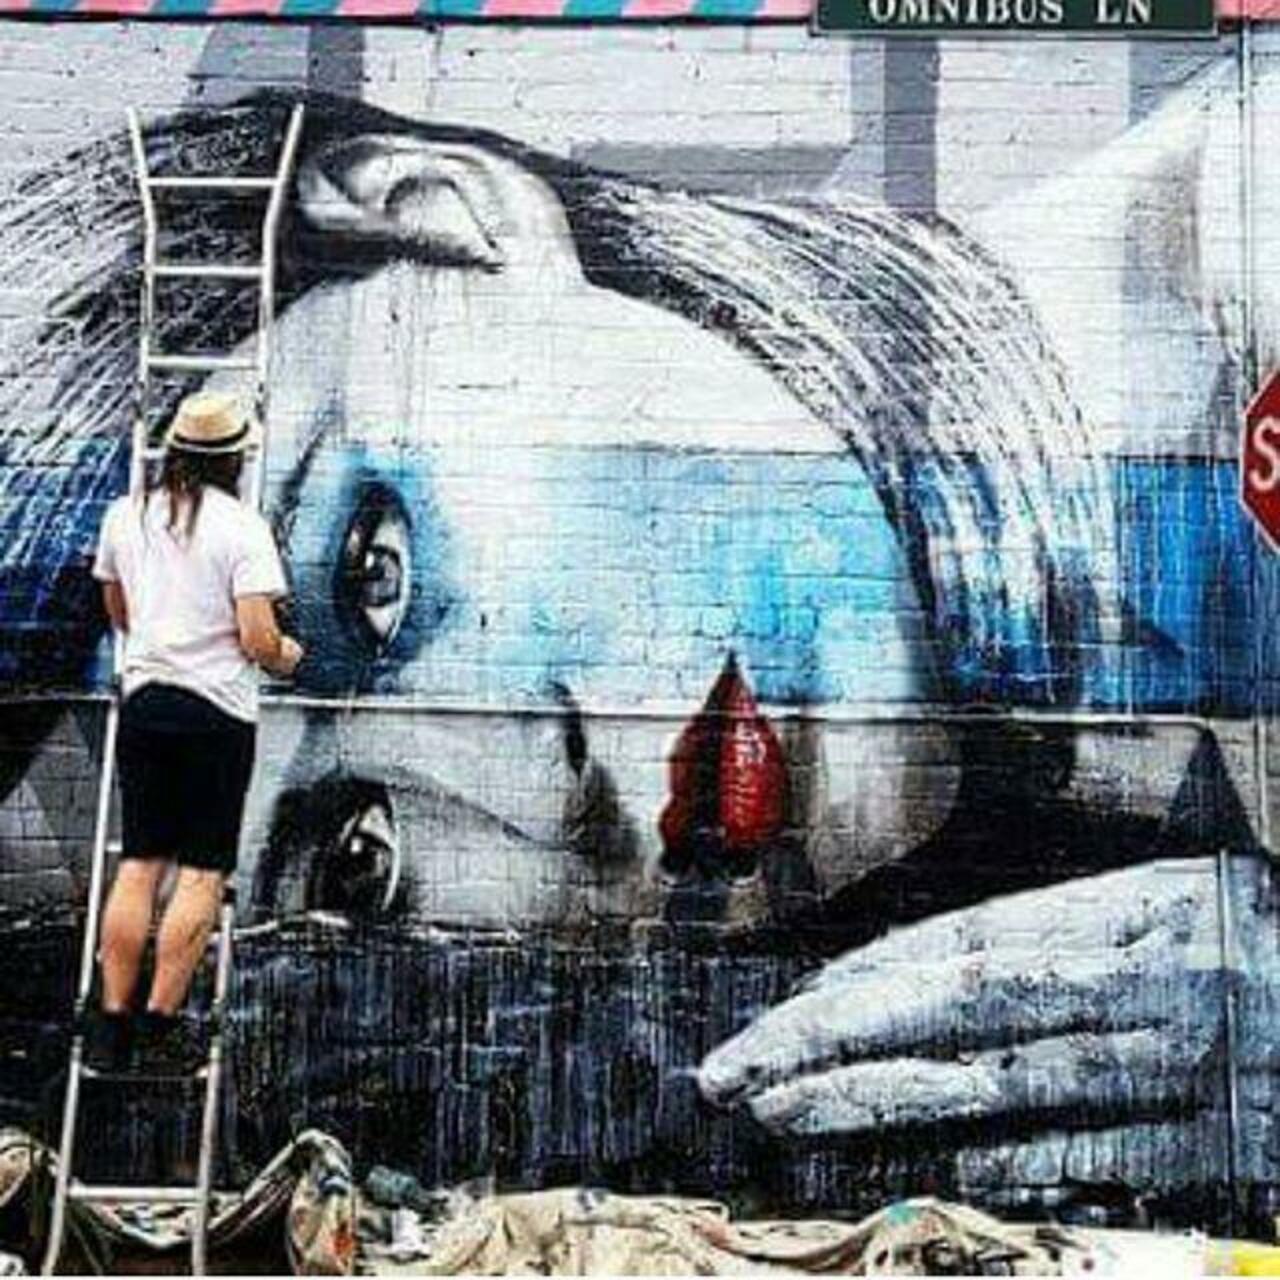 RT @weigeltw: By @r_o_n_e and #numskull
#mural #streetart #graffiti #grafite #spraypaint #urbanart http://t.co/ts4ptld5T1